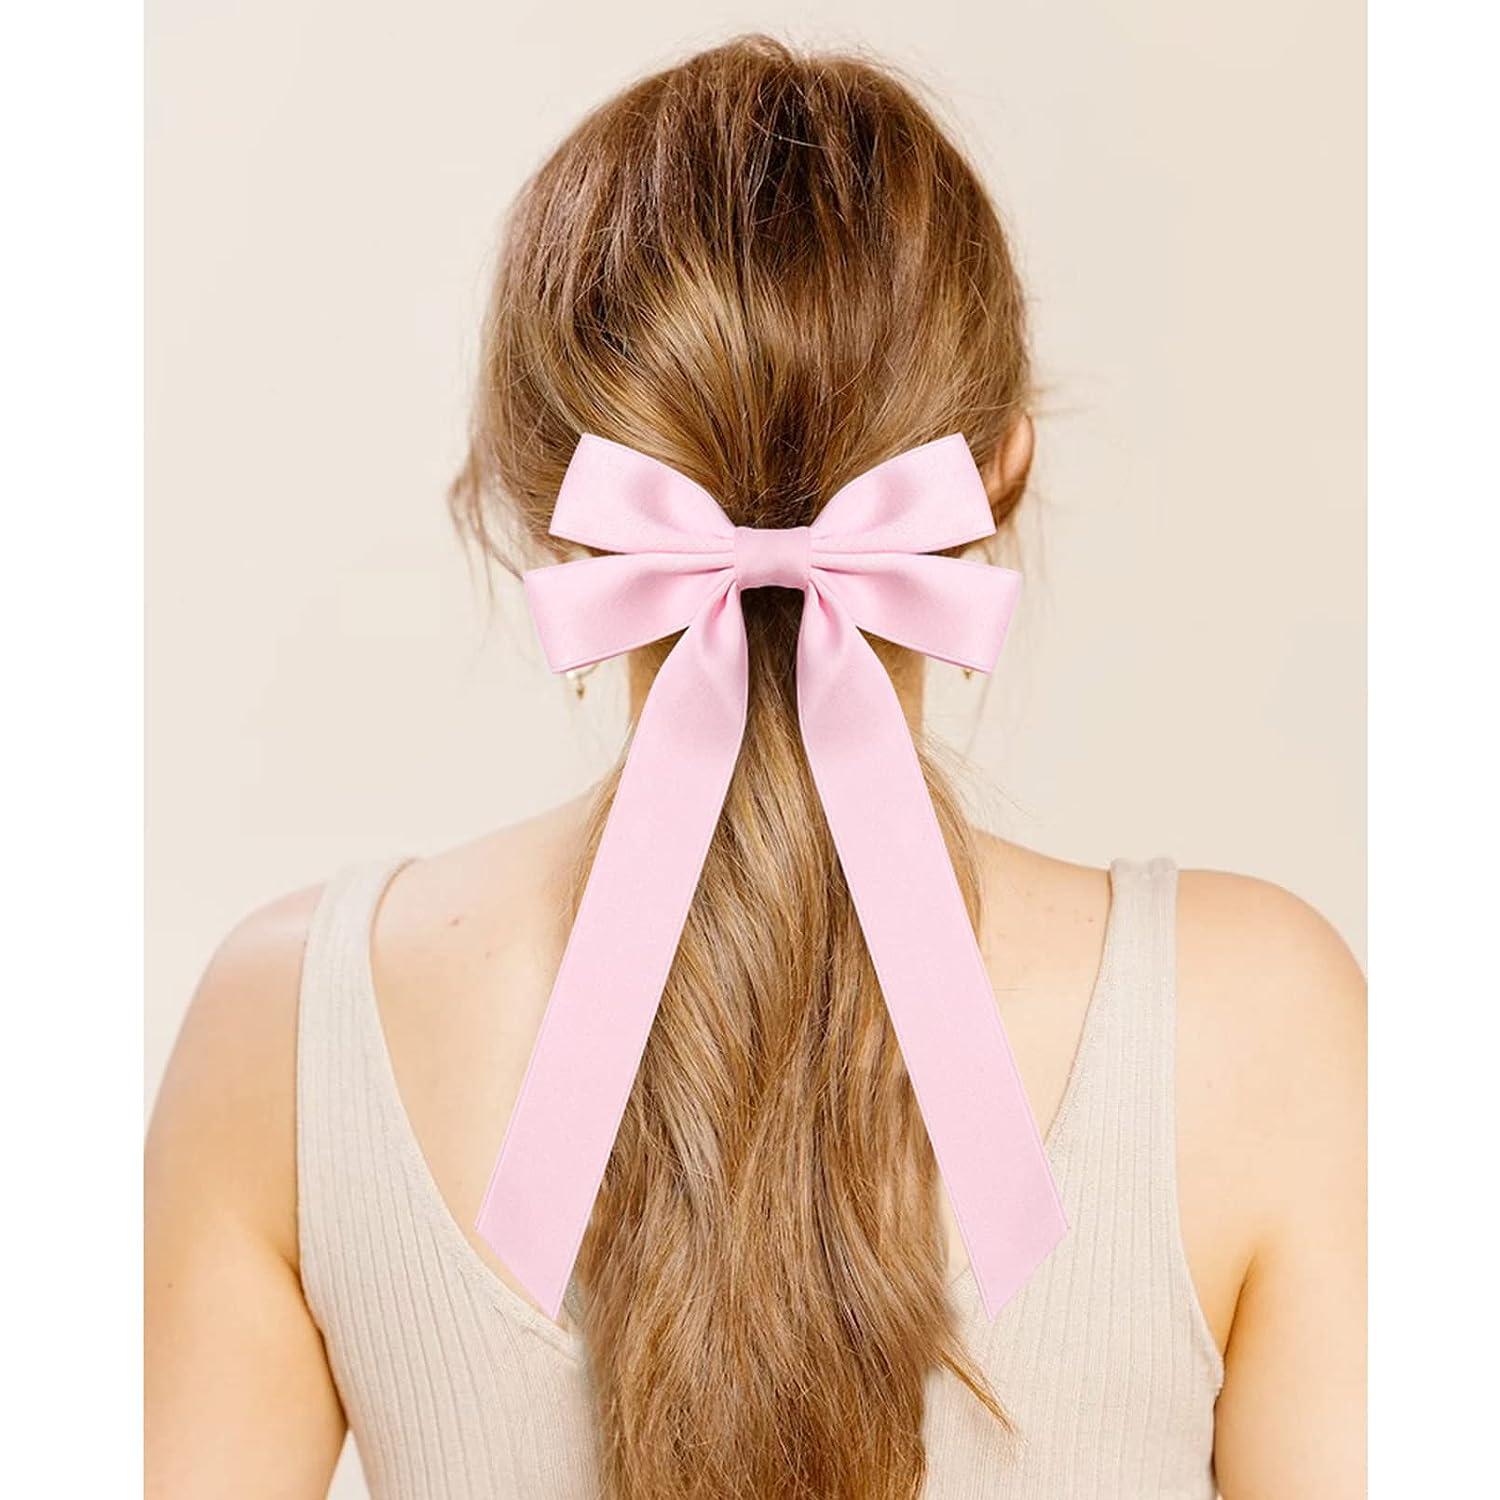 Strasburg Children Satin Ribbon Hair Bow with Alligator Clip Dressy Large Bow for Hair, Pink